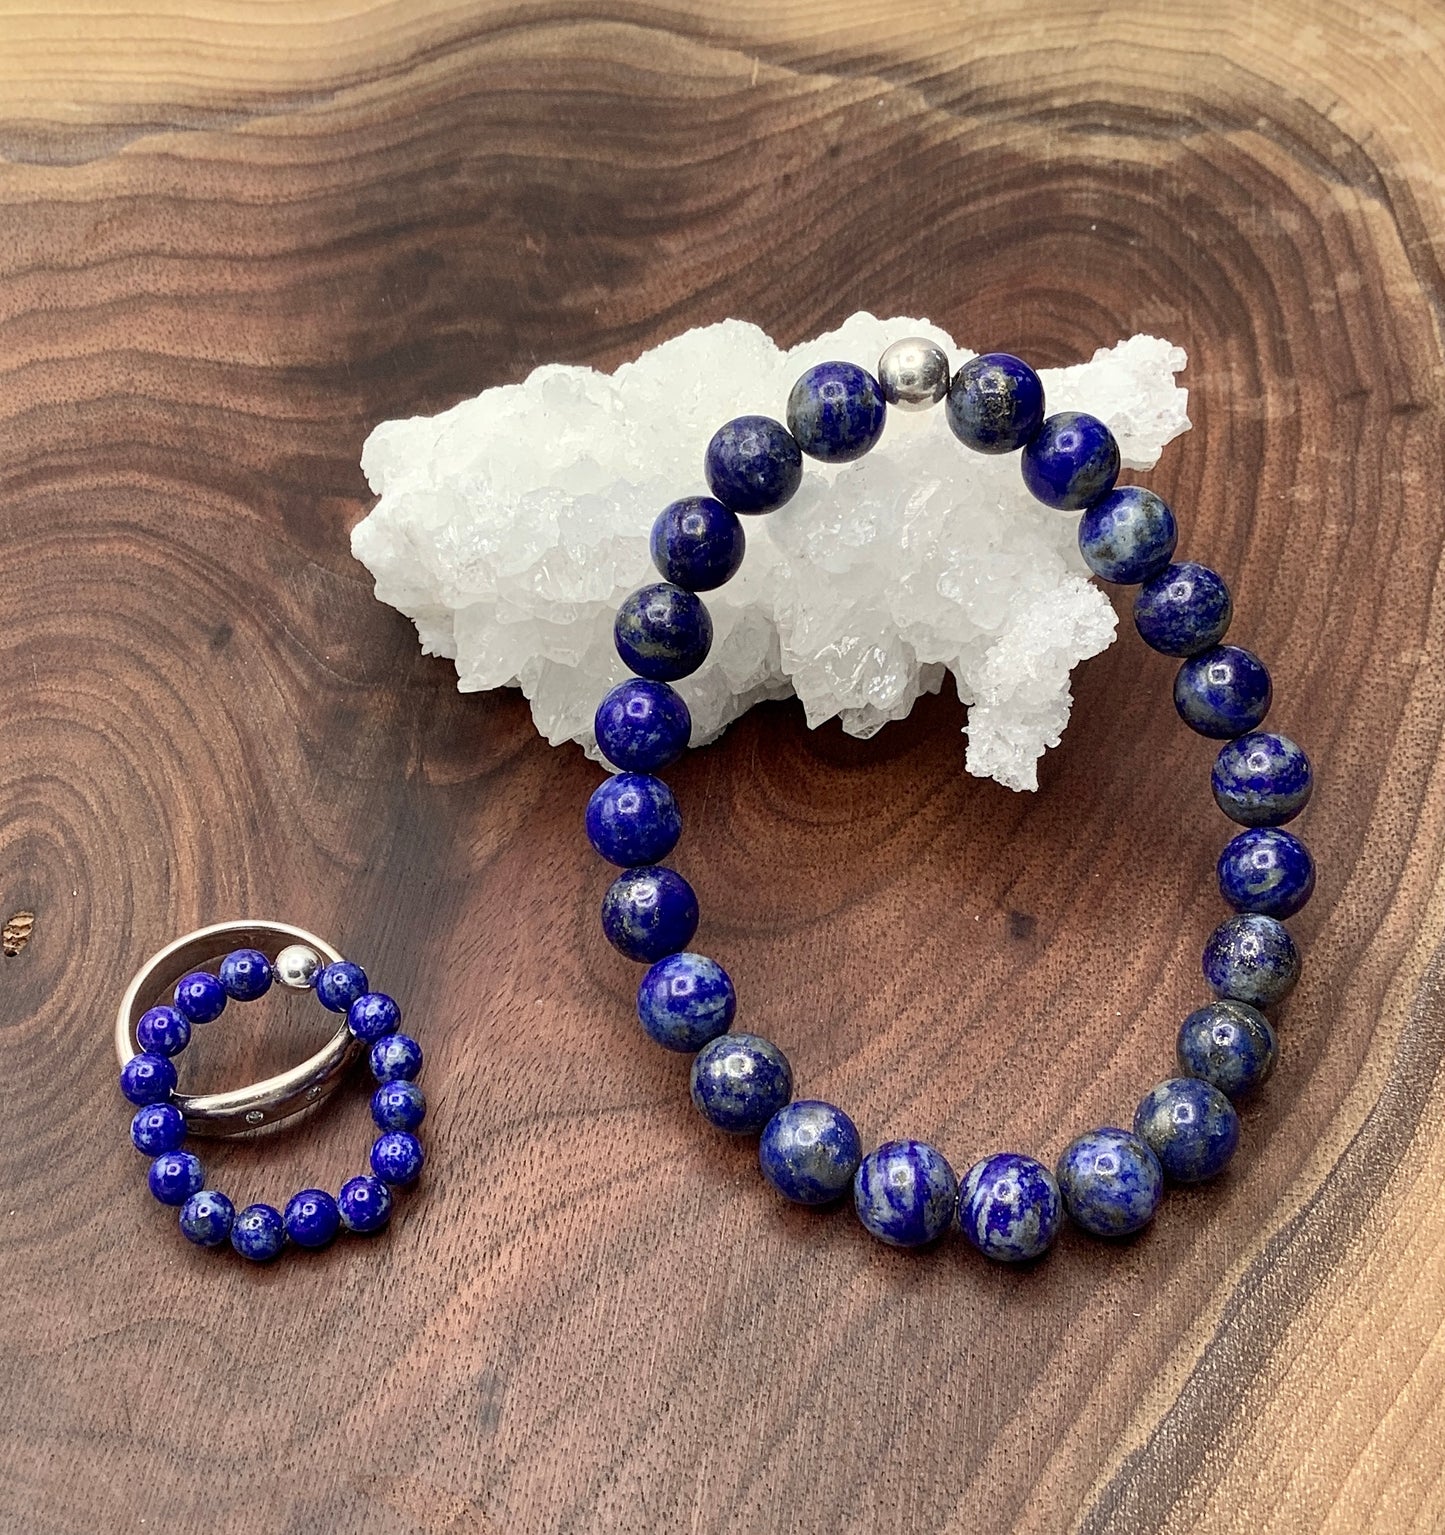 Lapis Lazuli bracelet with Sterling Silver Bead and Lapis Lazuli Ring with Sterling Silver Bead